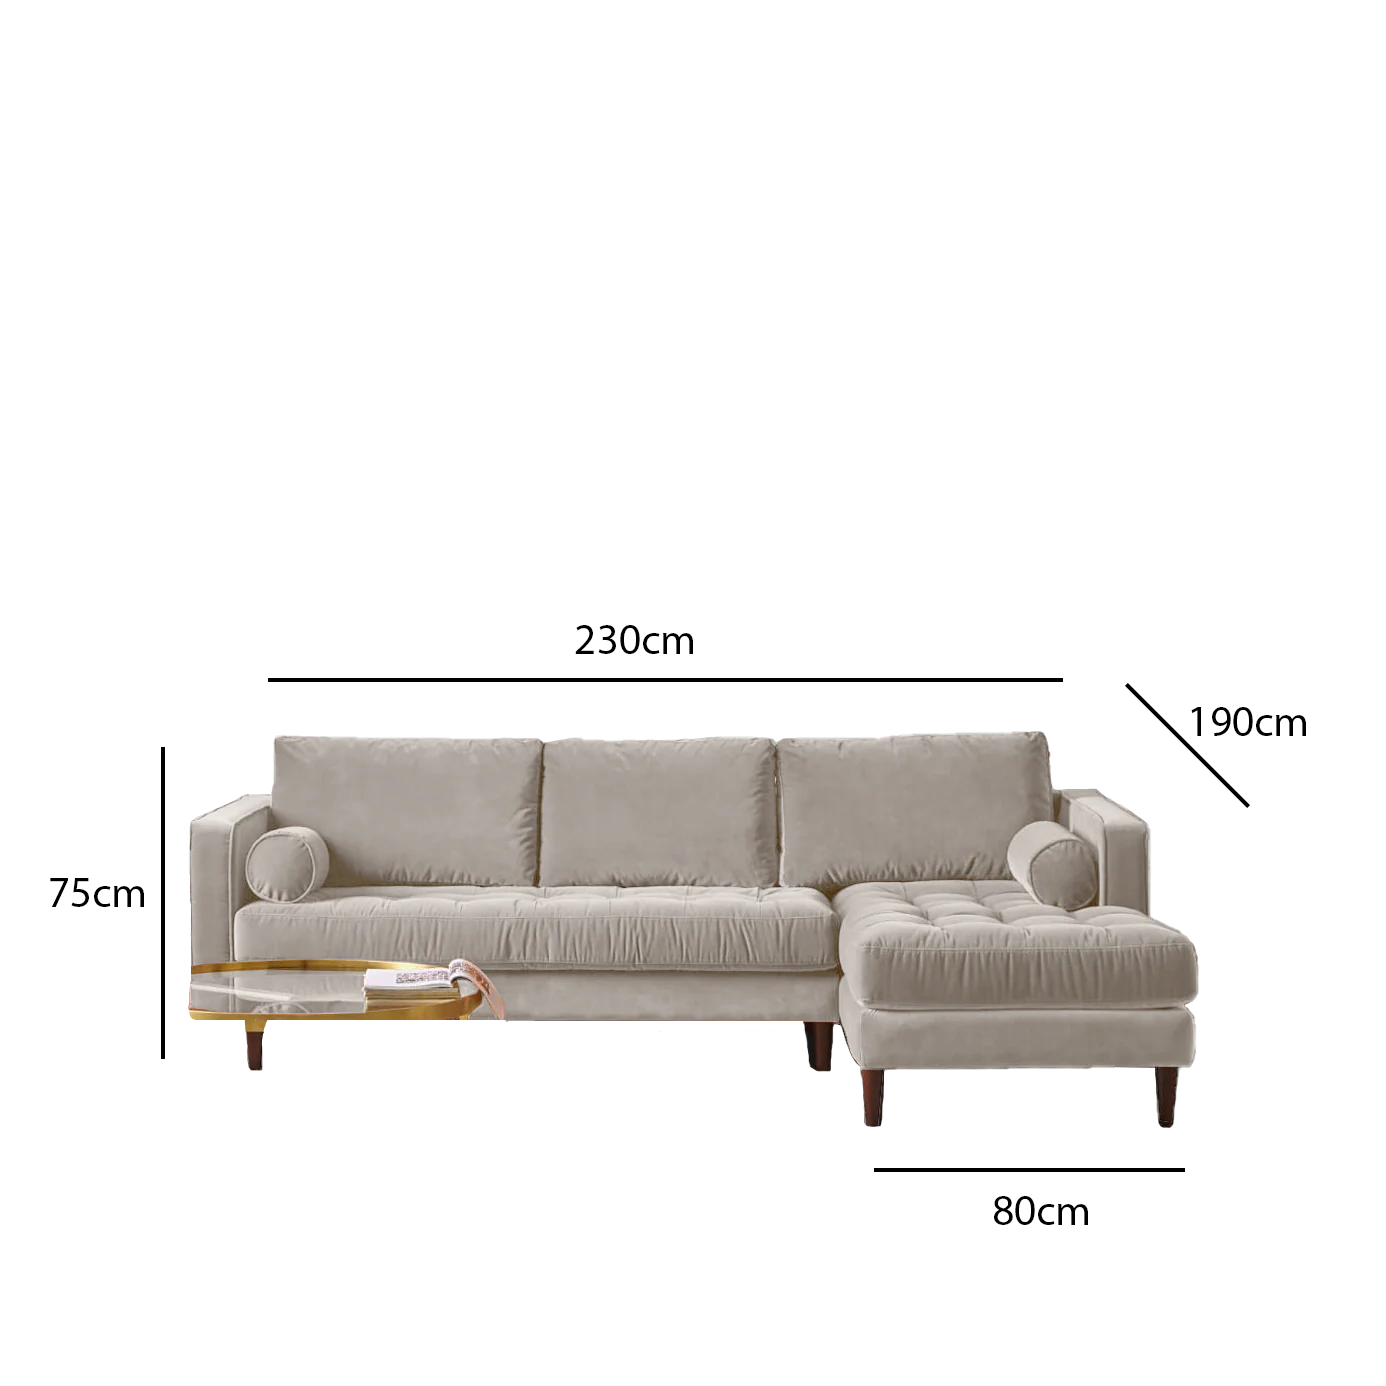 Corner sofa 190 x 230 cm - multiple colors - KM1005